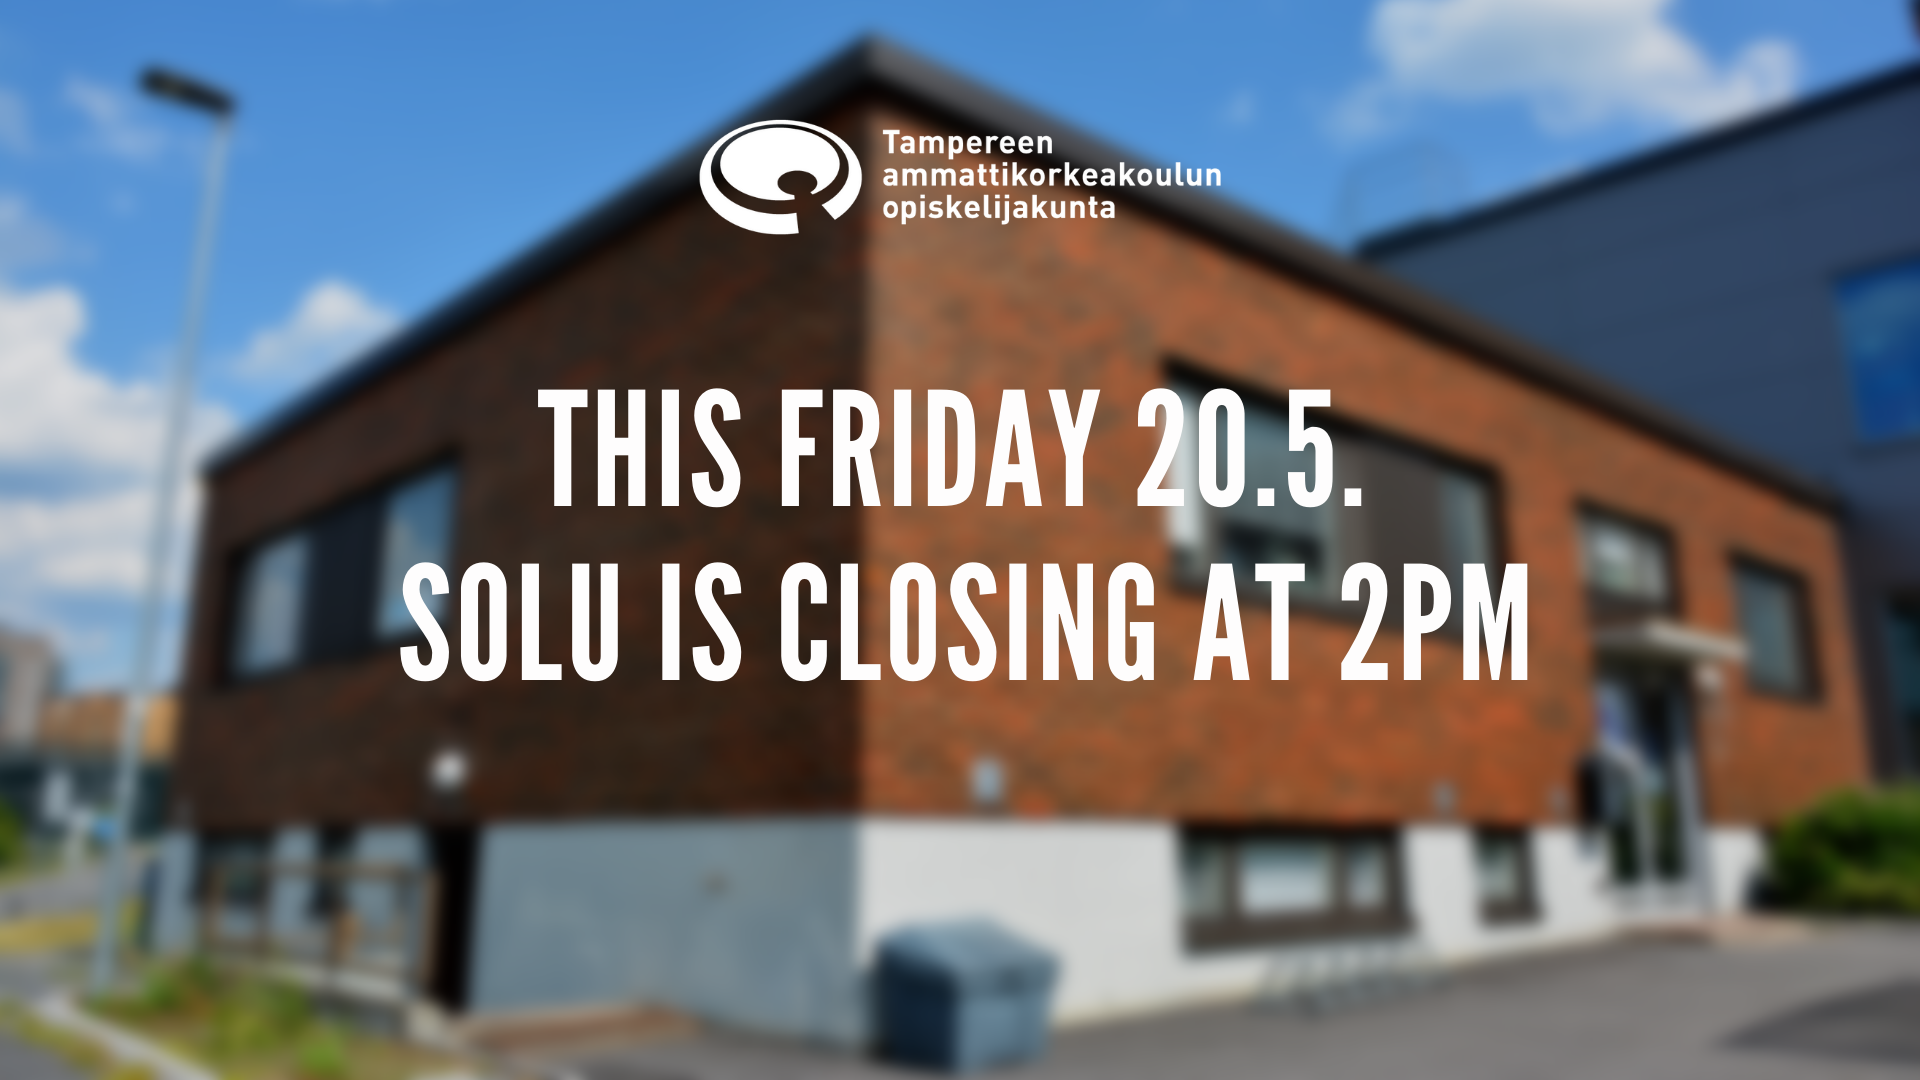 Solu is closing at 2pm this Friday